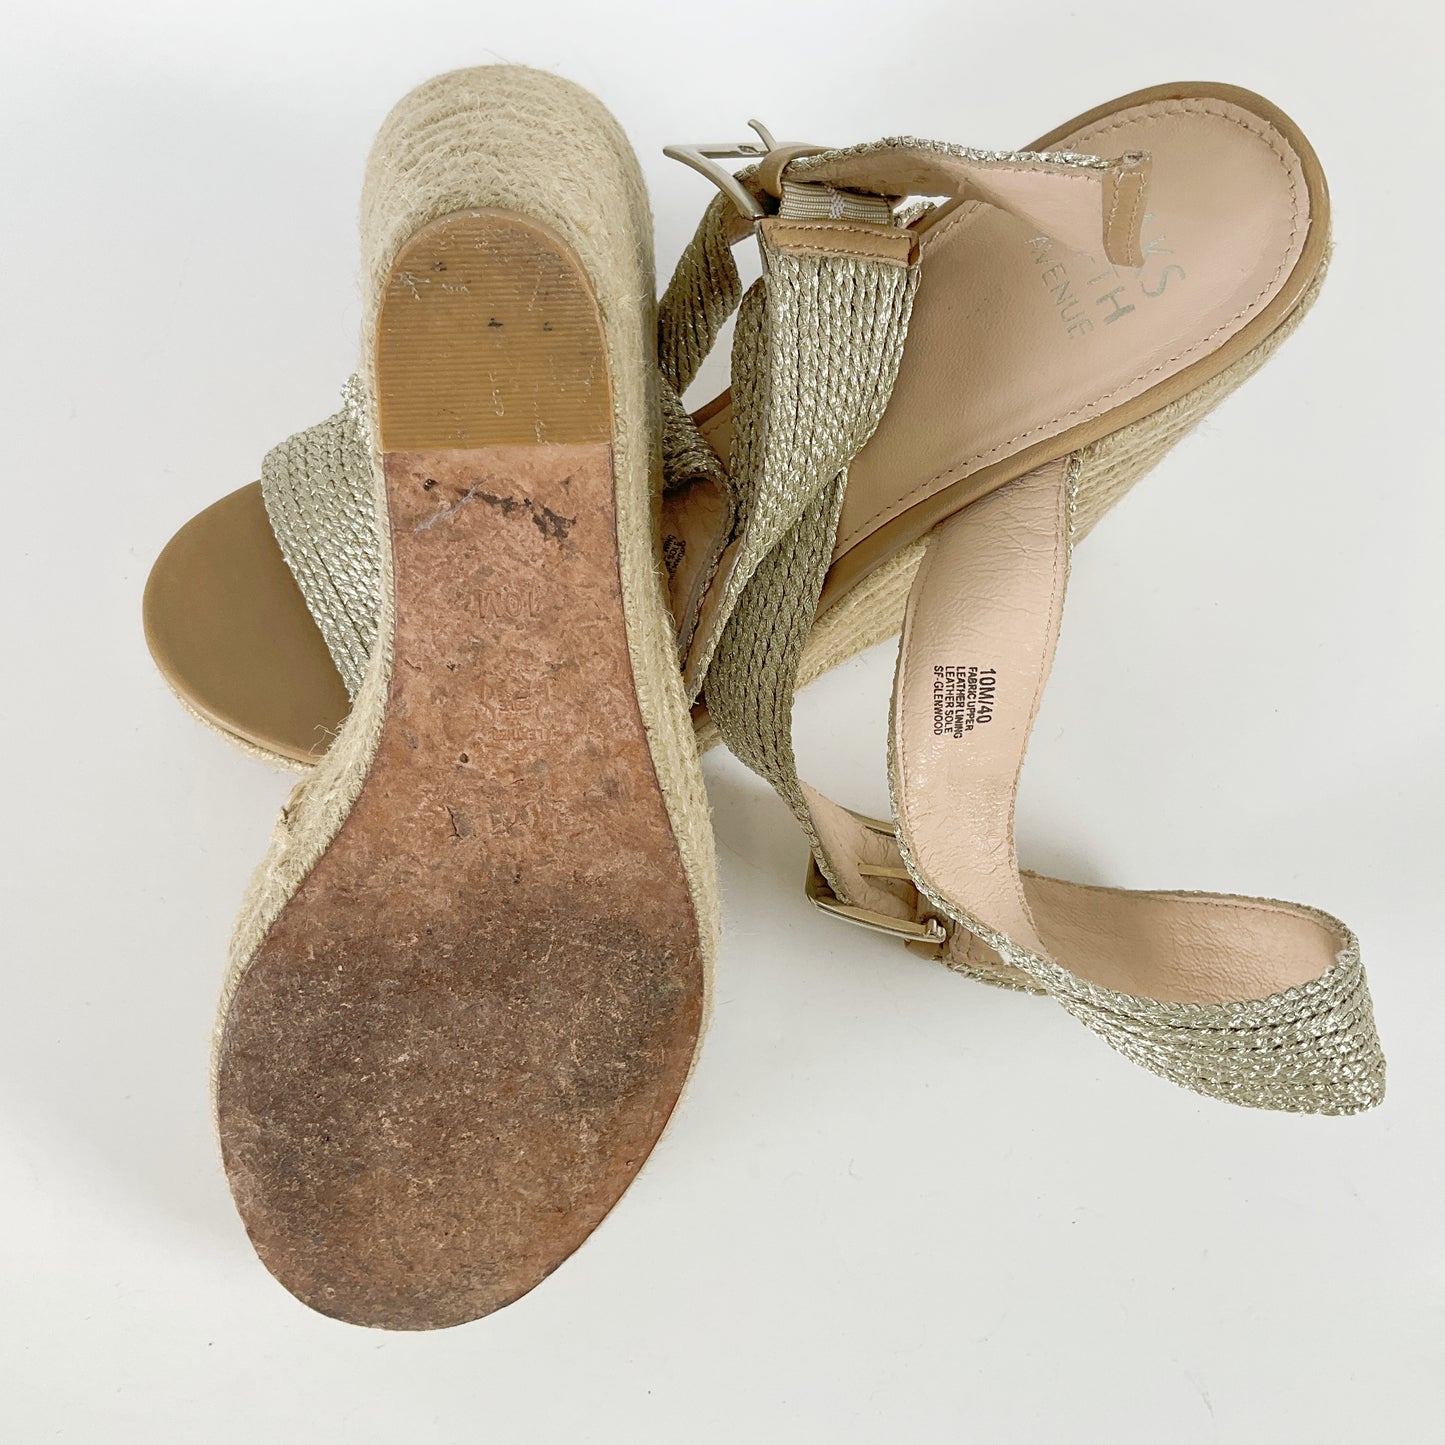 SAKS Fifth Avenue - Redwood Sandals Shoes